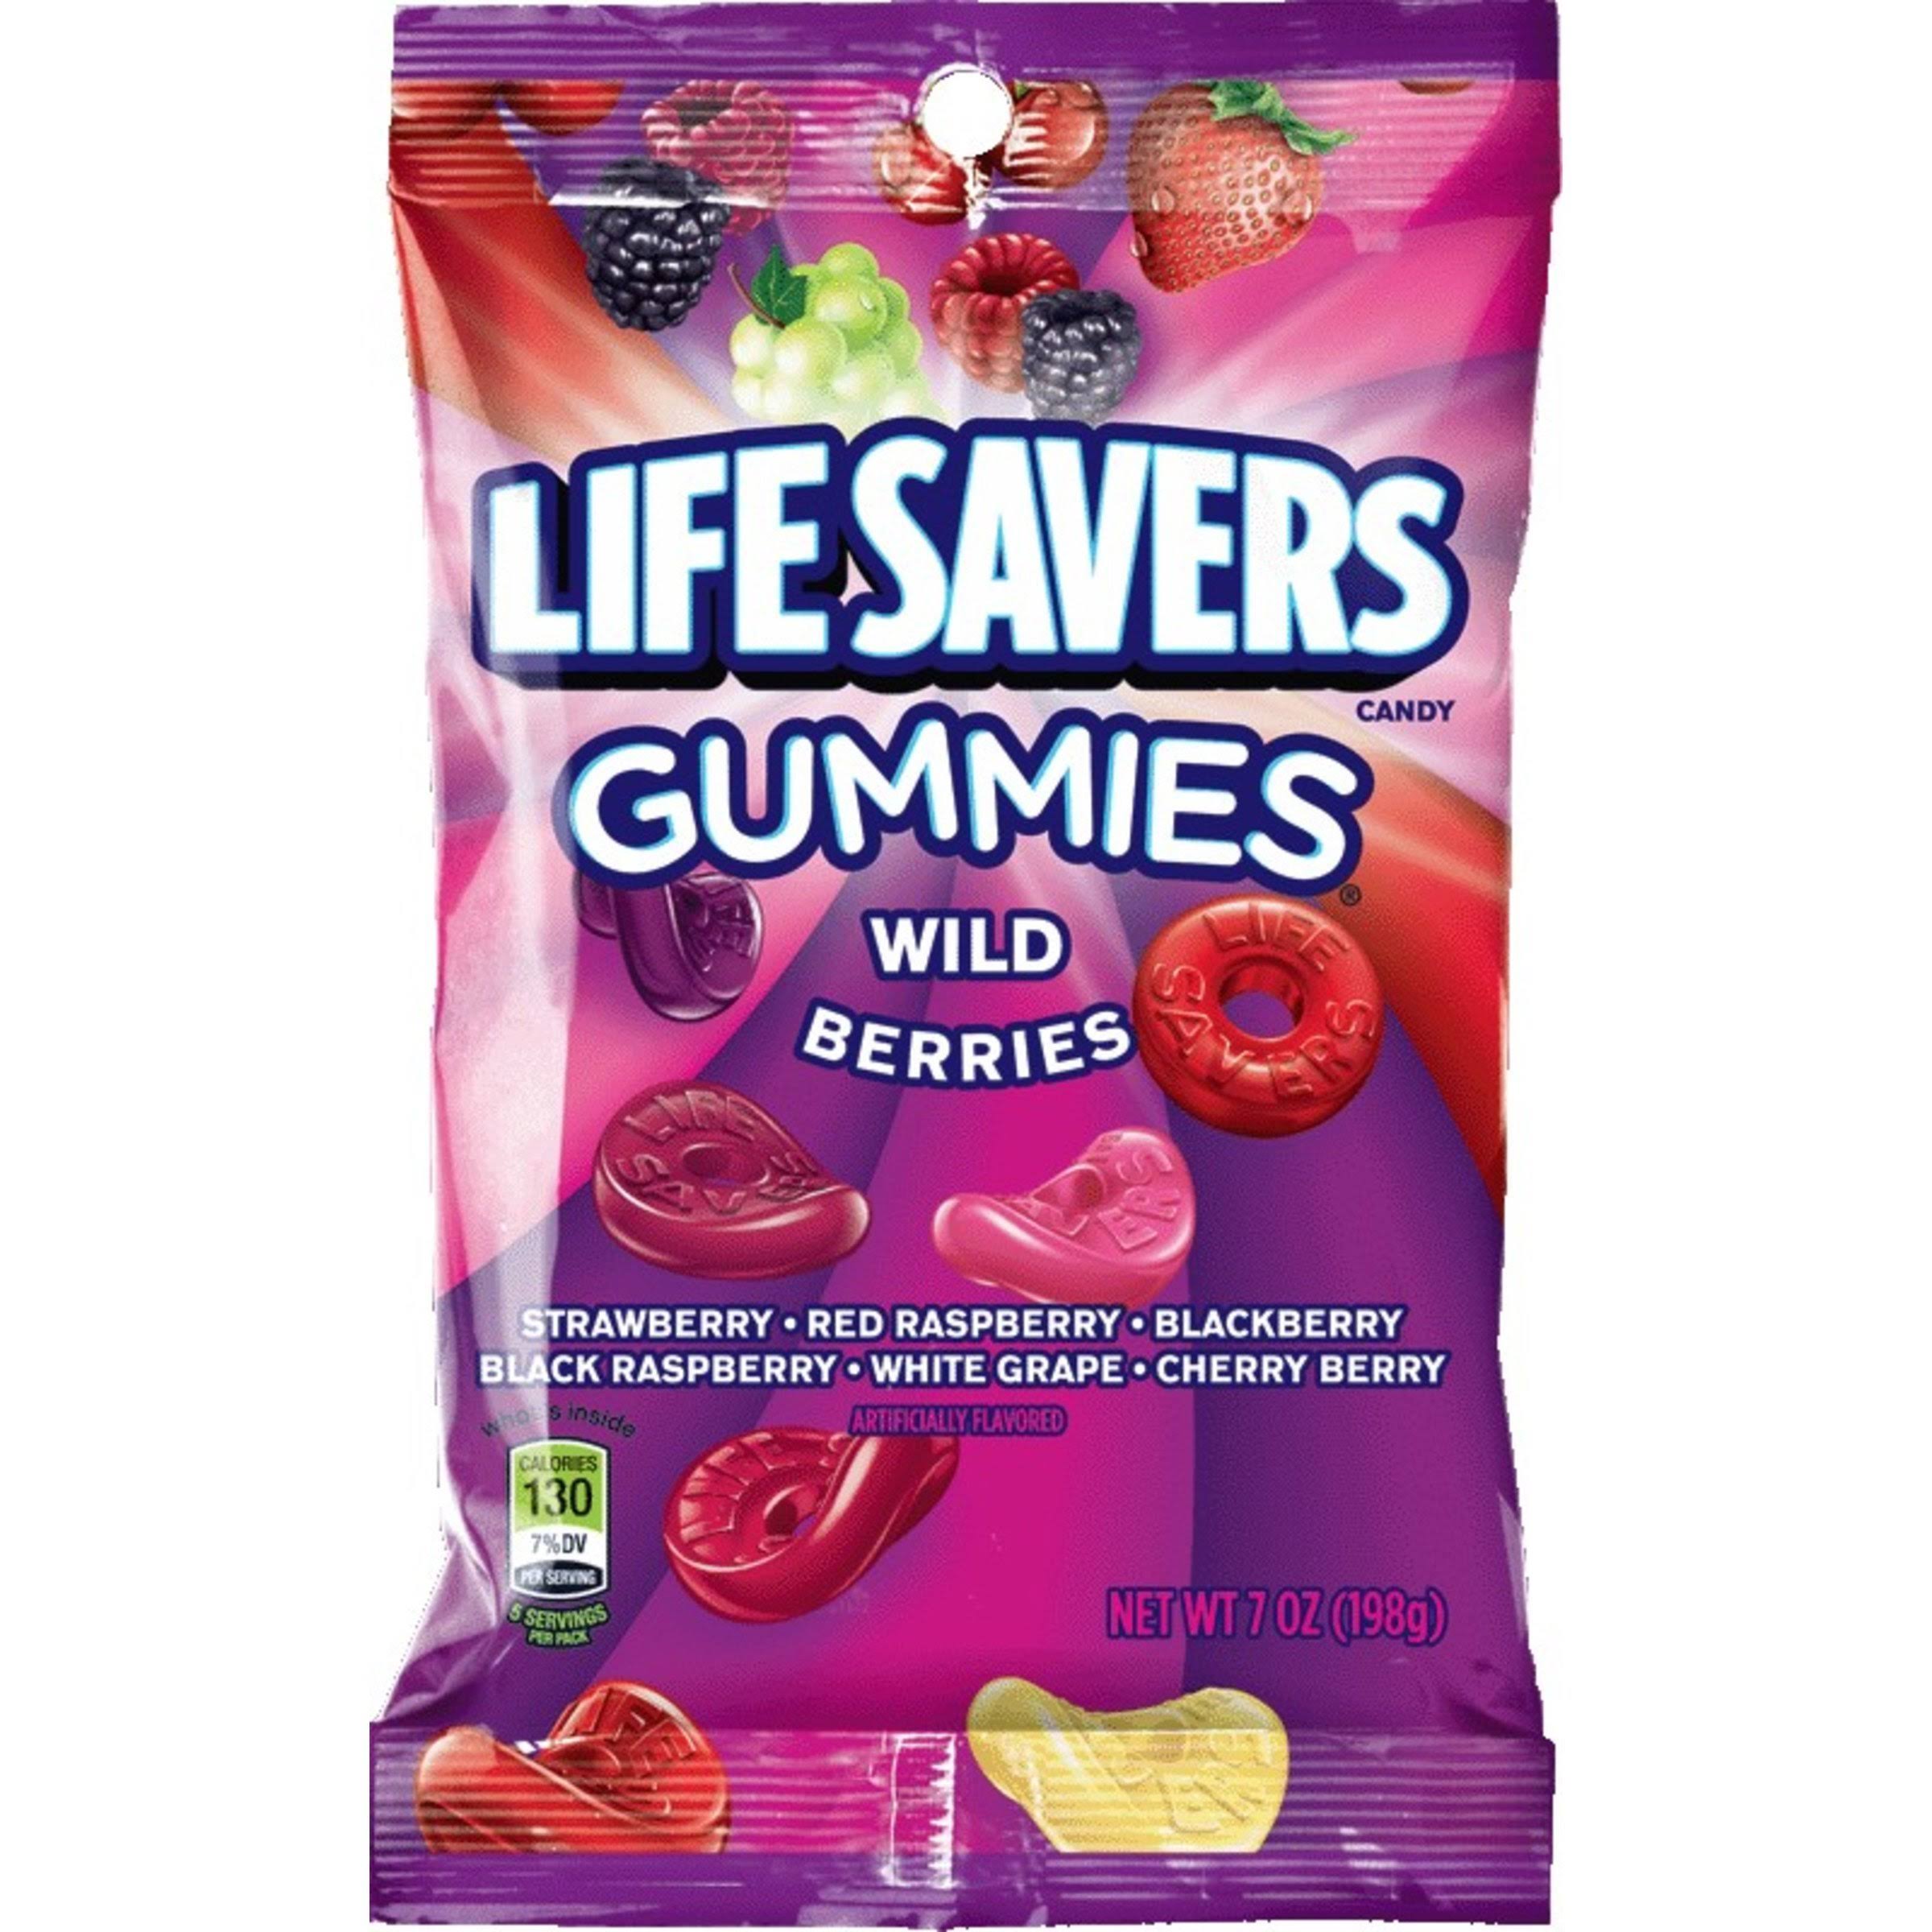 Life Savers Gummies Candy - Wild Berries, 7oz